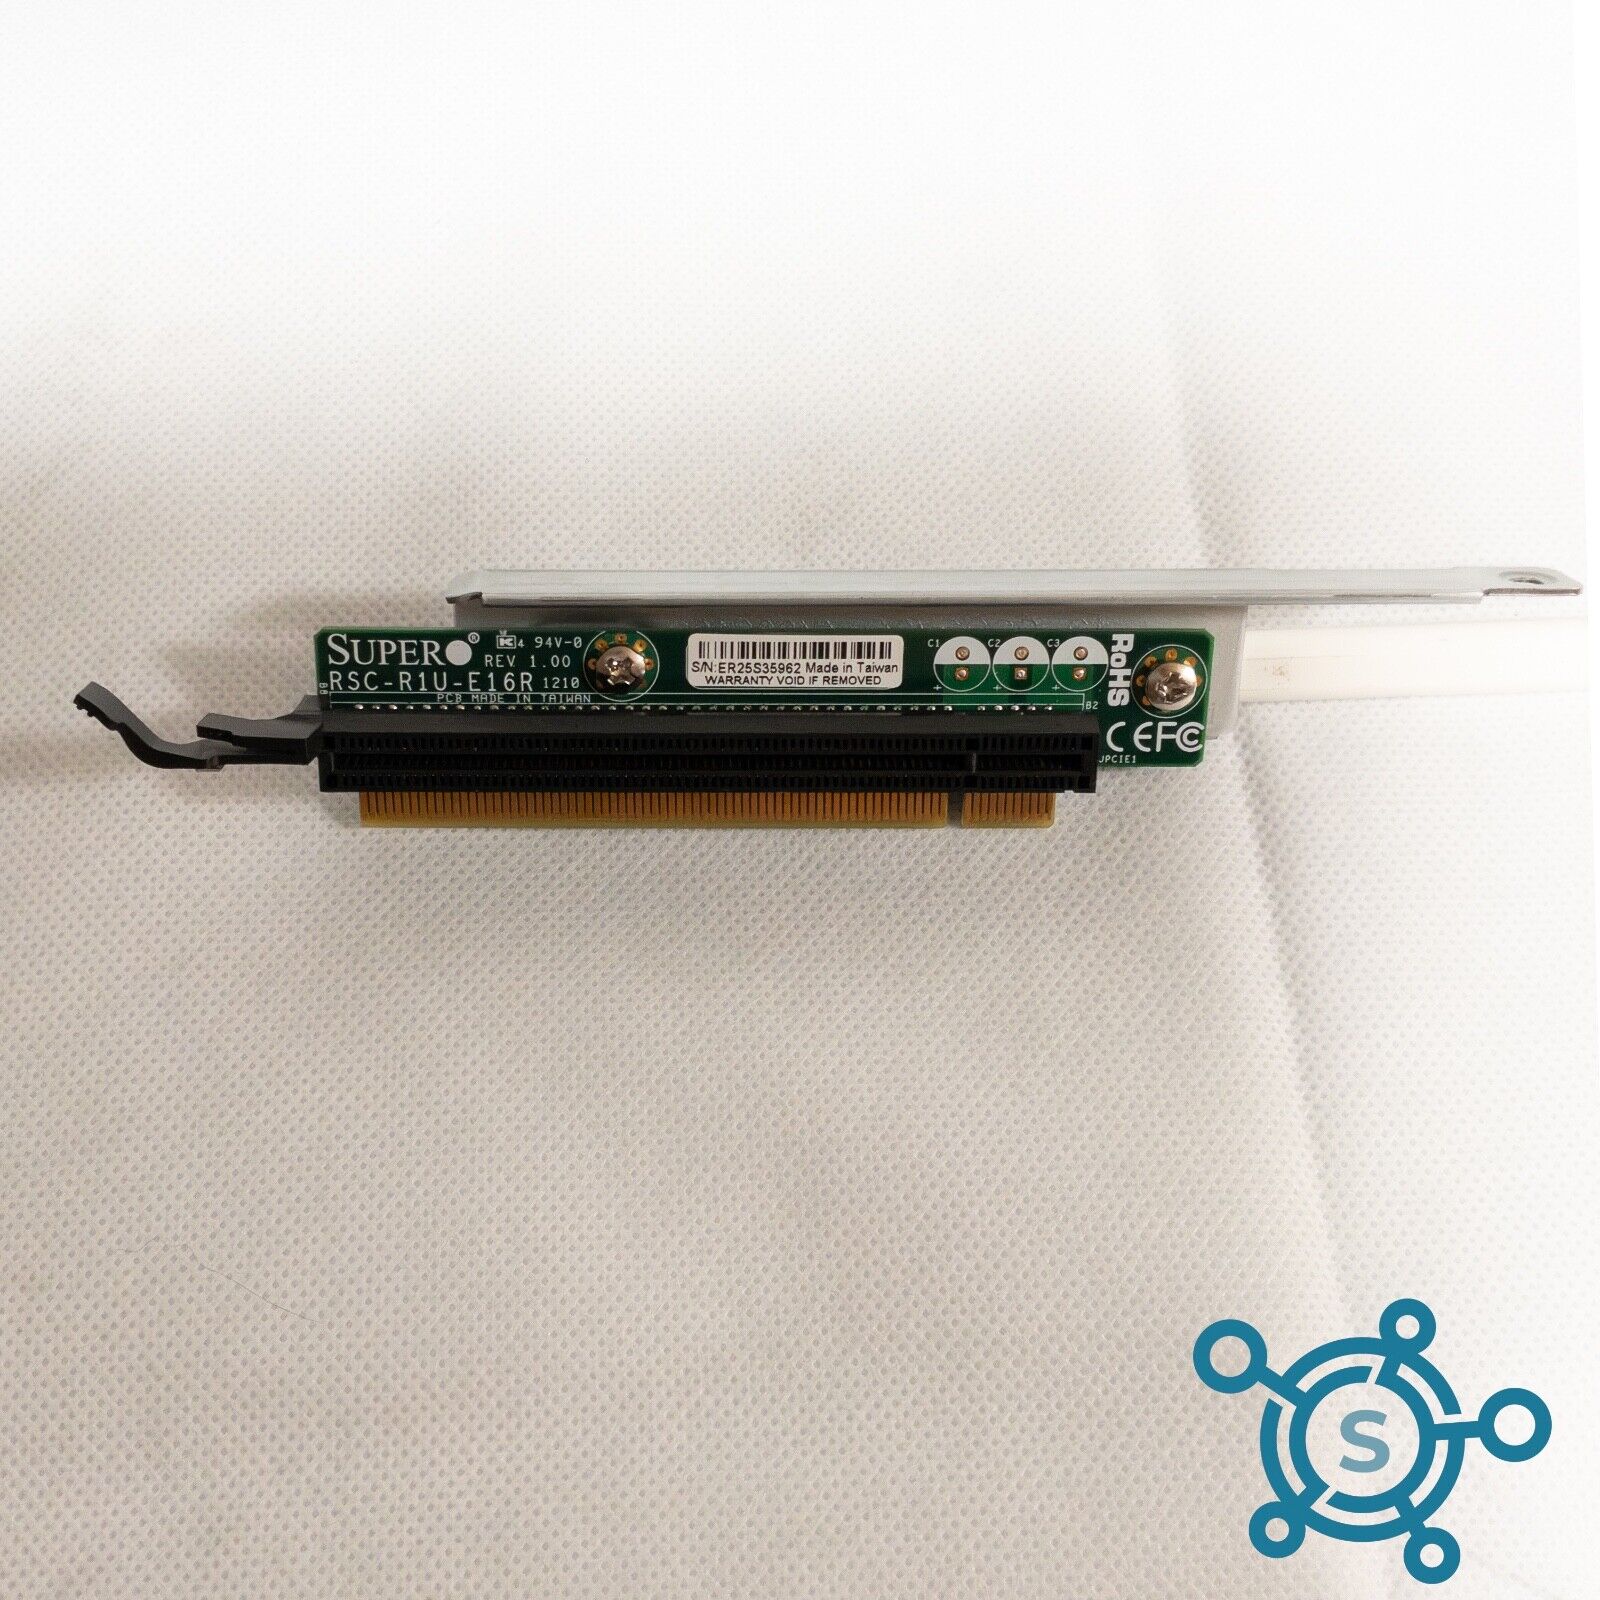 Supermicro RSC-R1U-E16R 1U Right-Hand PCIe Riser Card 1U For TwinPro System